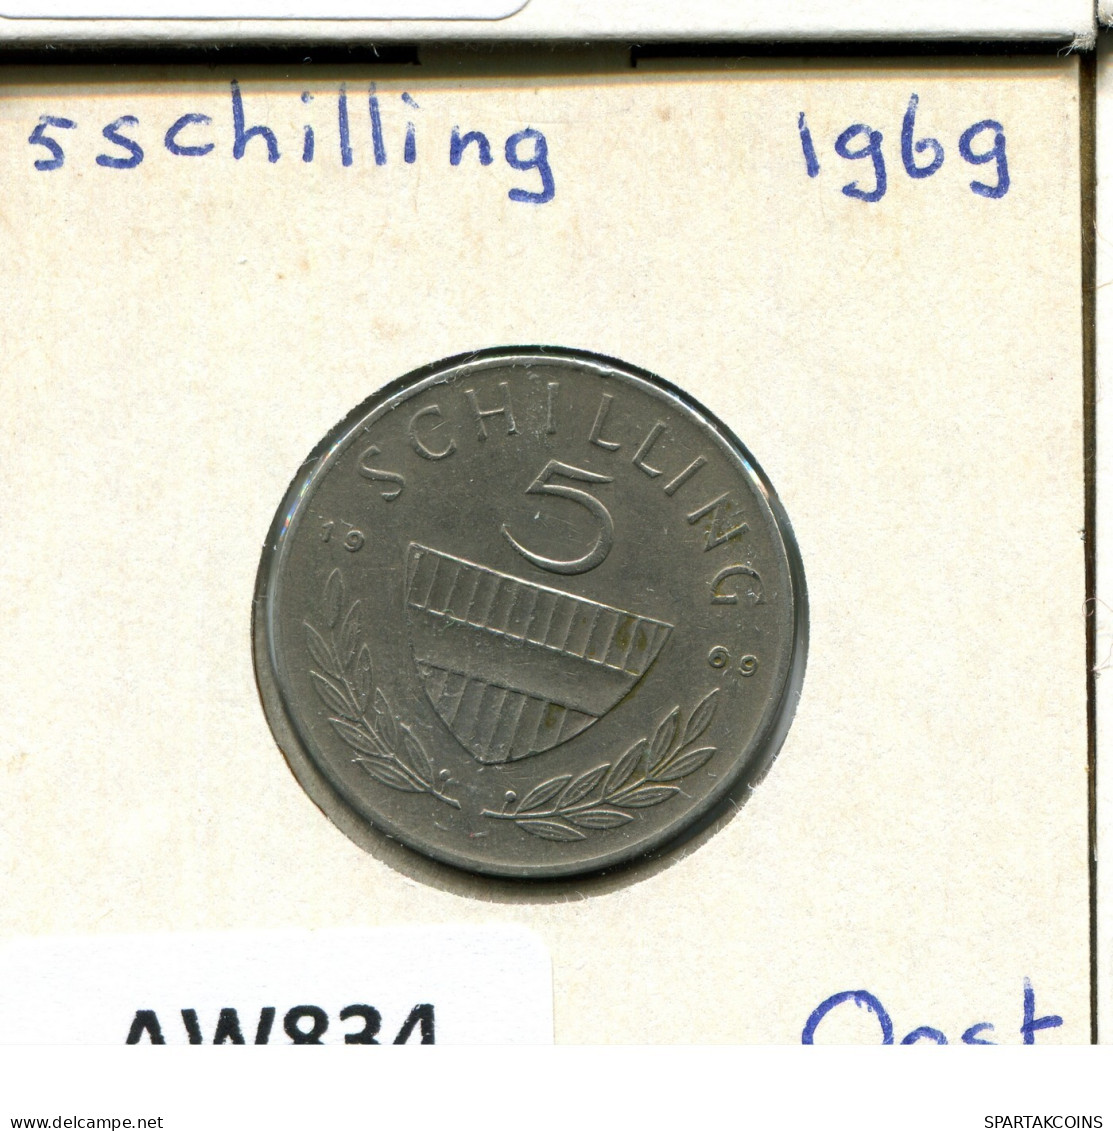 5 SCHILLING 1969 AUSTRIA Coin #AW834.U.A - Austria